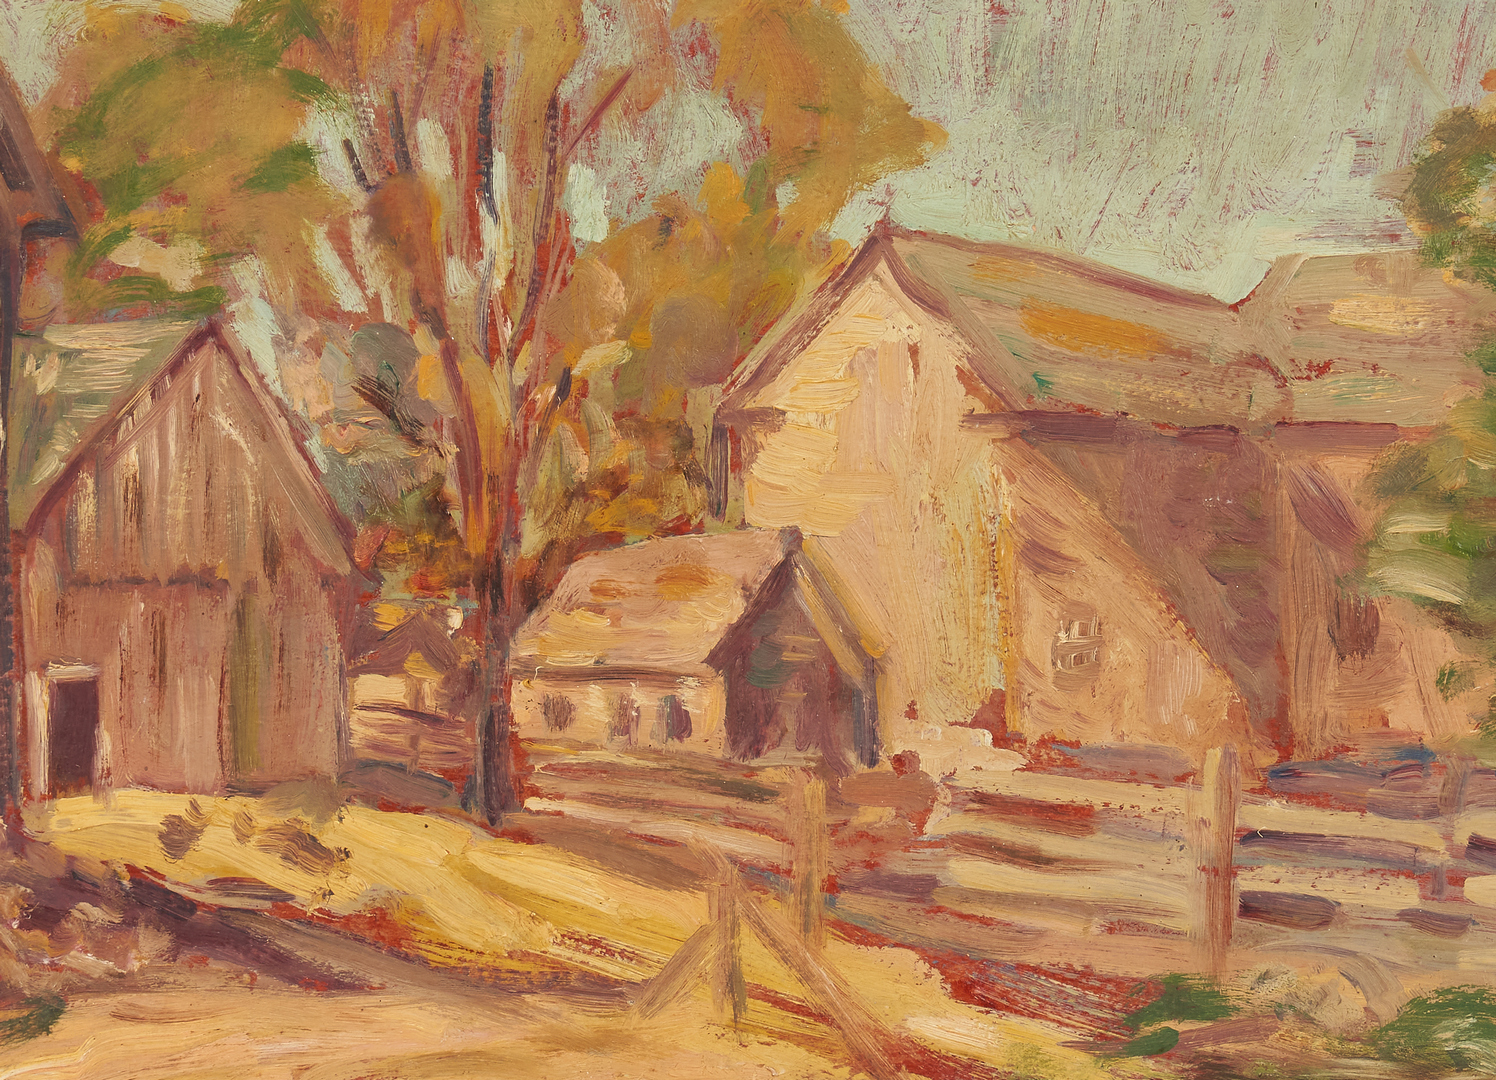 Lot 157: G. Symons O/B Landscape with Barn